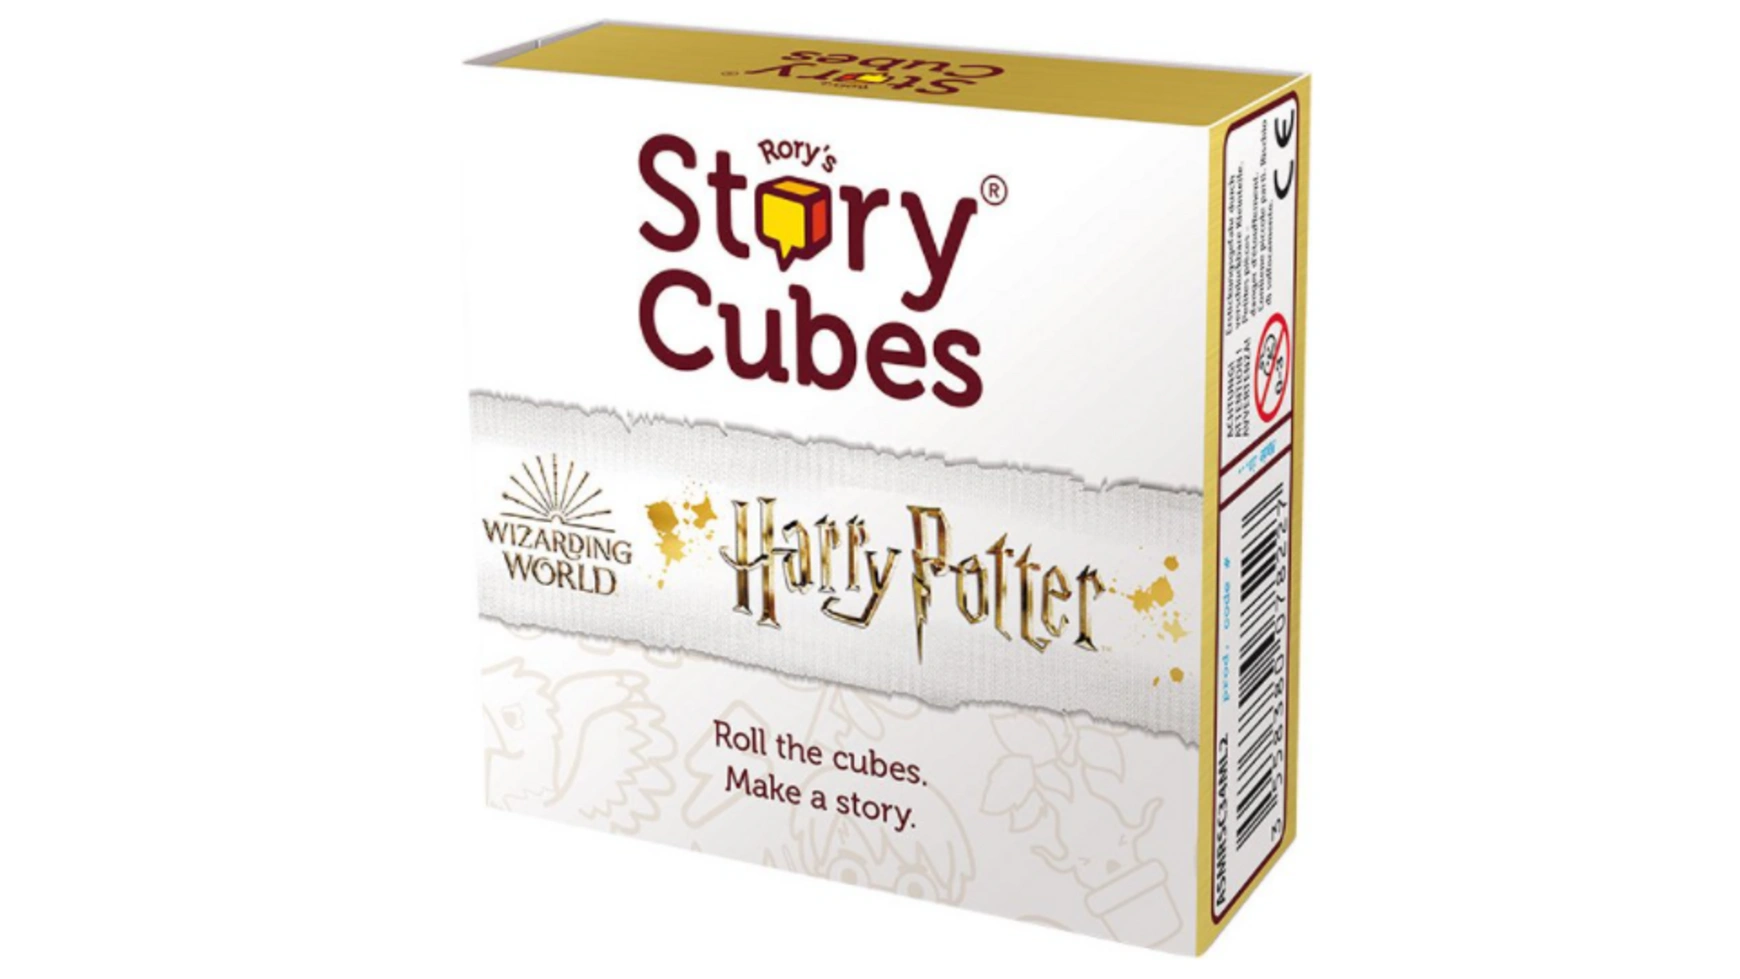 Rorys Story Cubes Кубики историй Рори: Гарри Поттер игра кубики историй действия